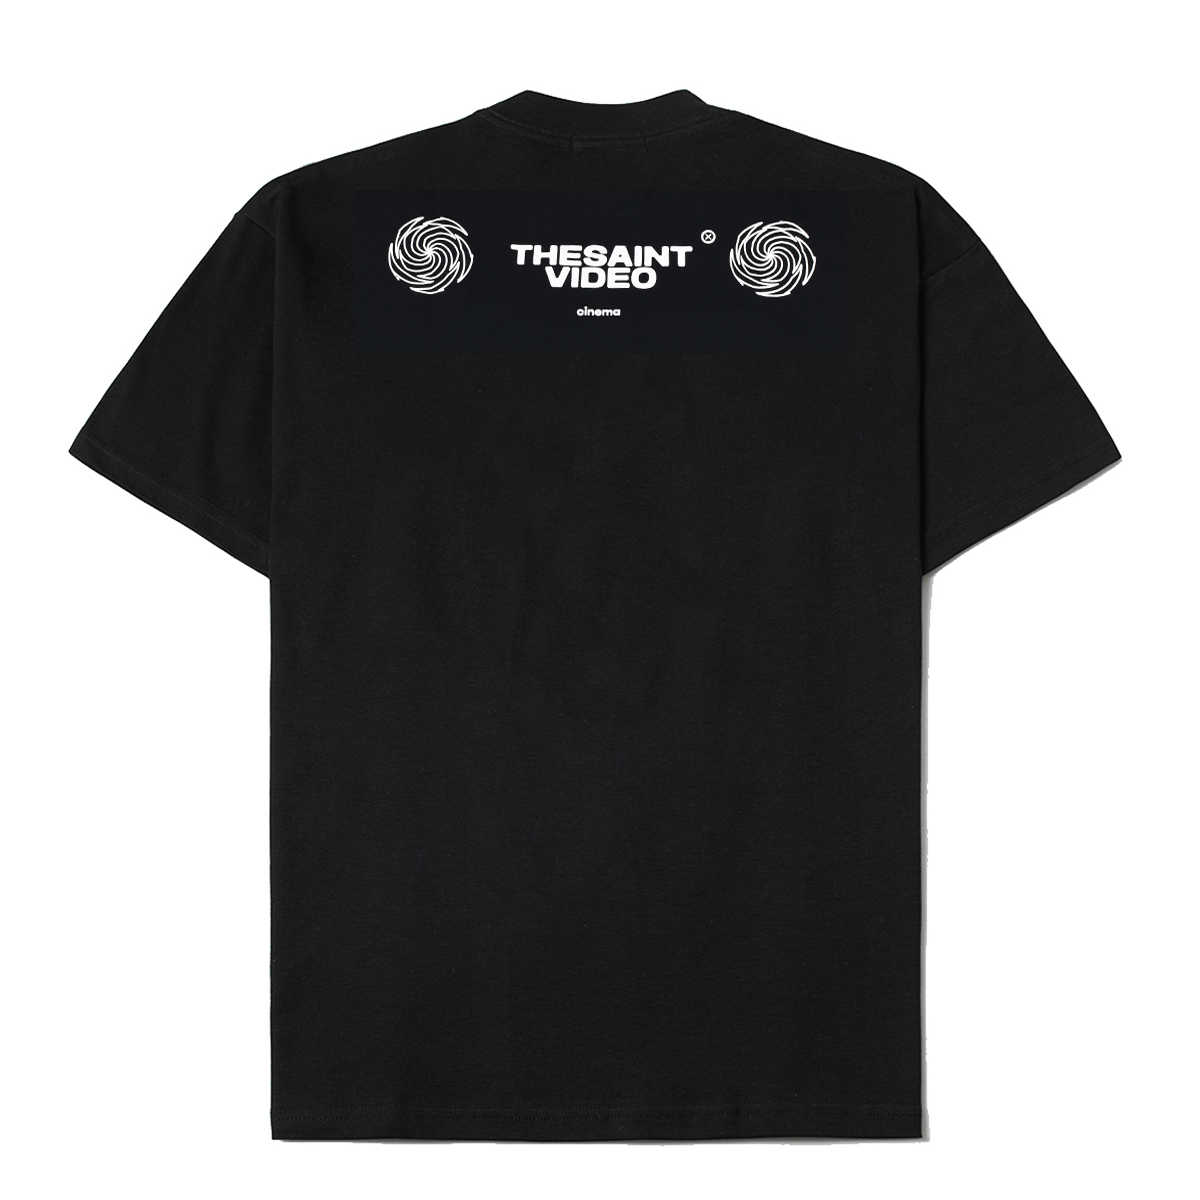 Camiseta TheSaint Boxy Video (Black)